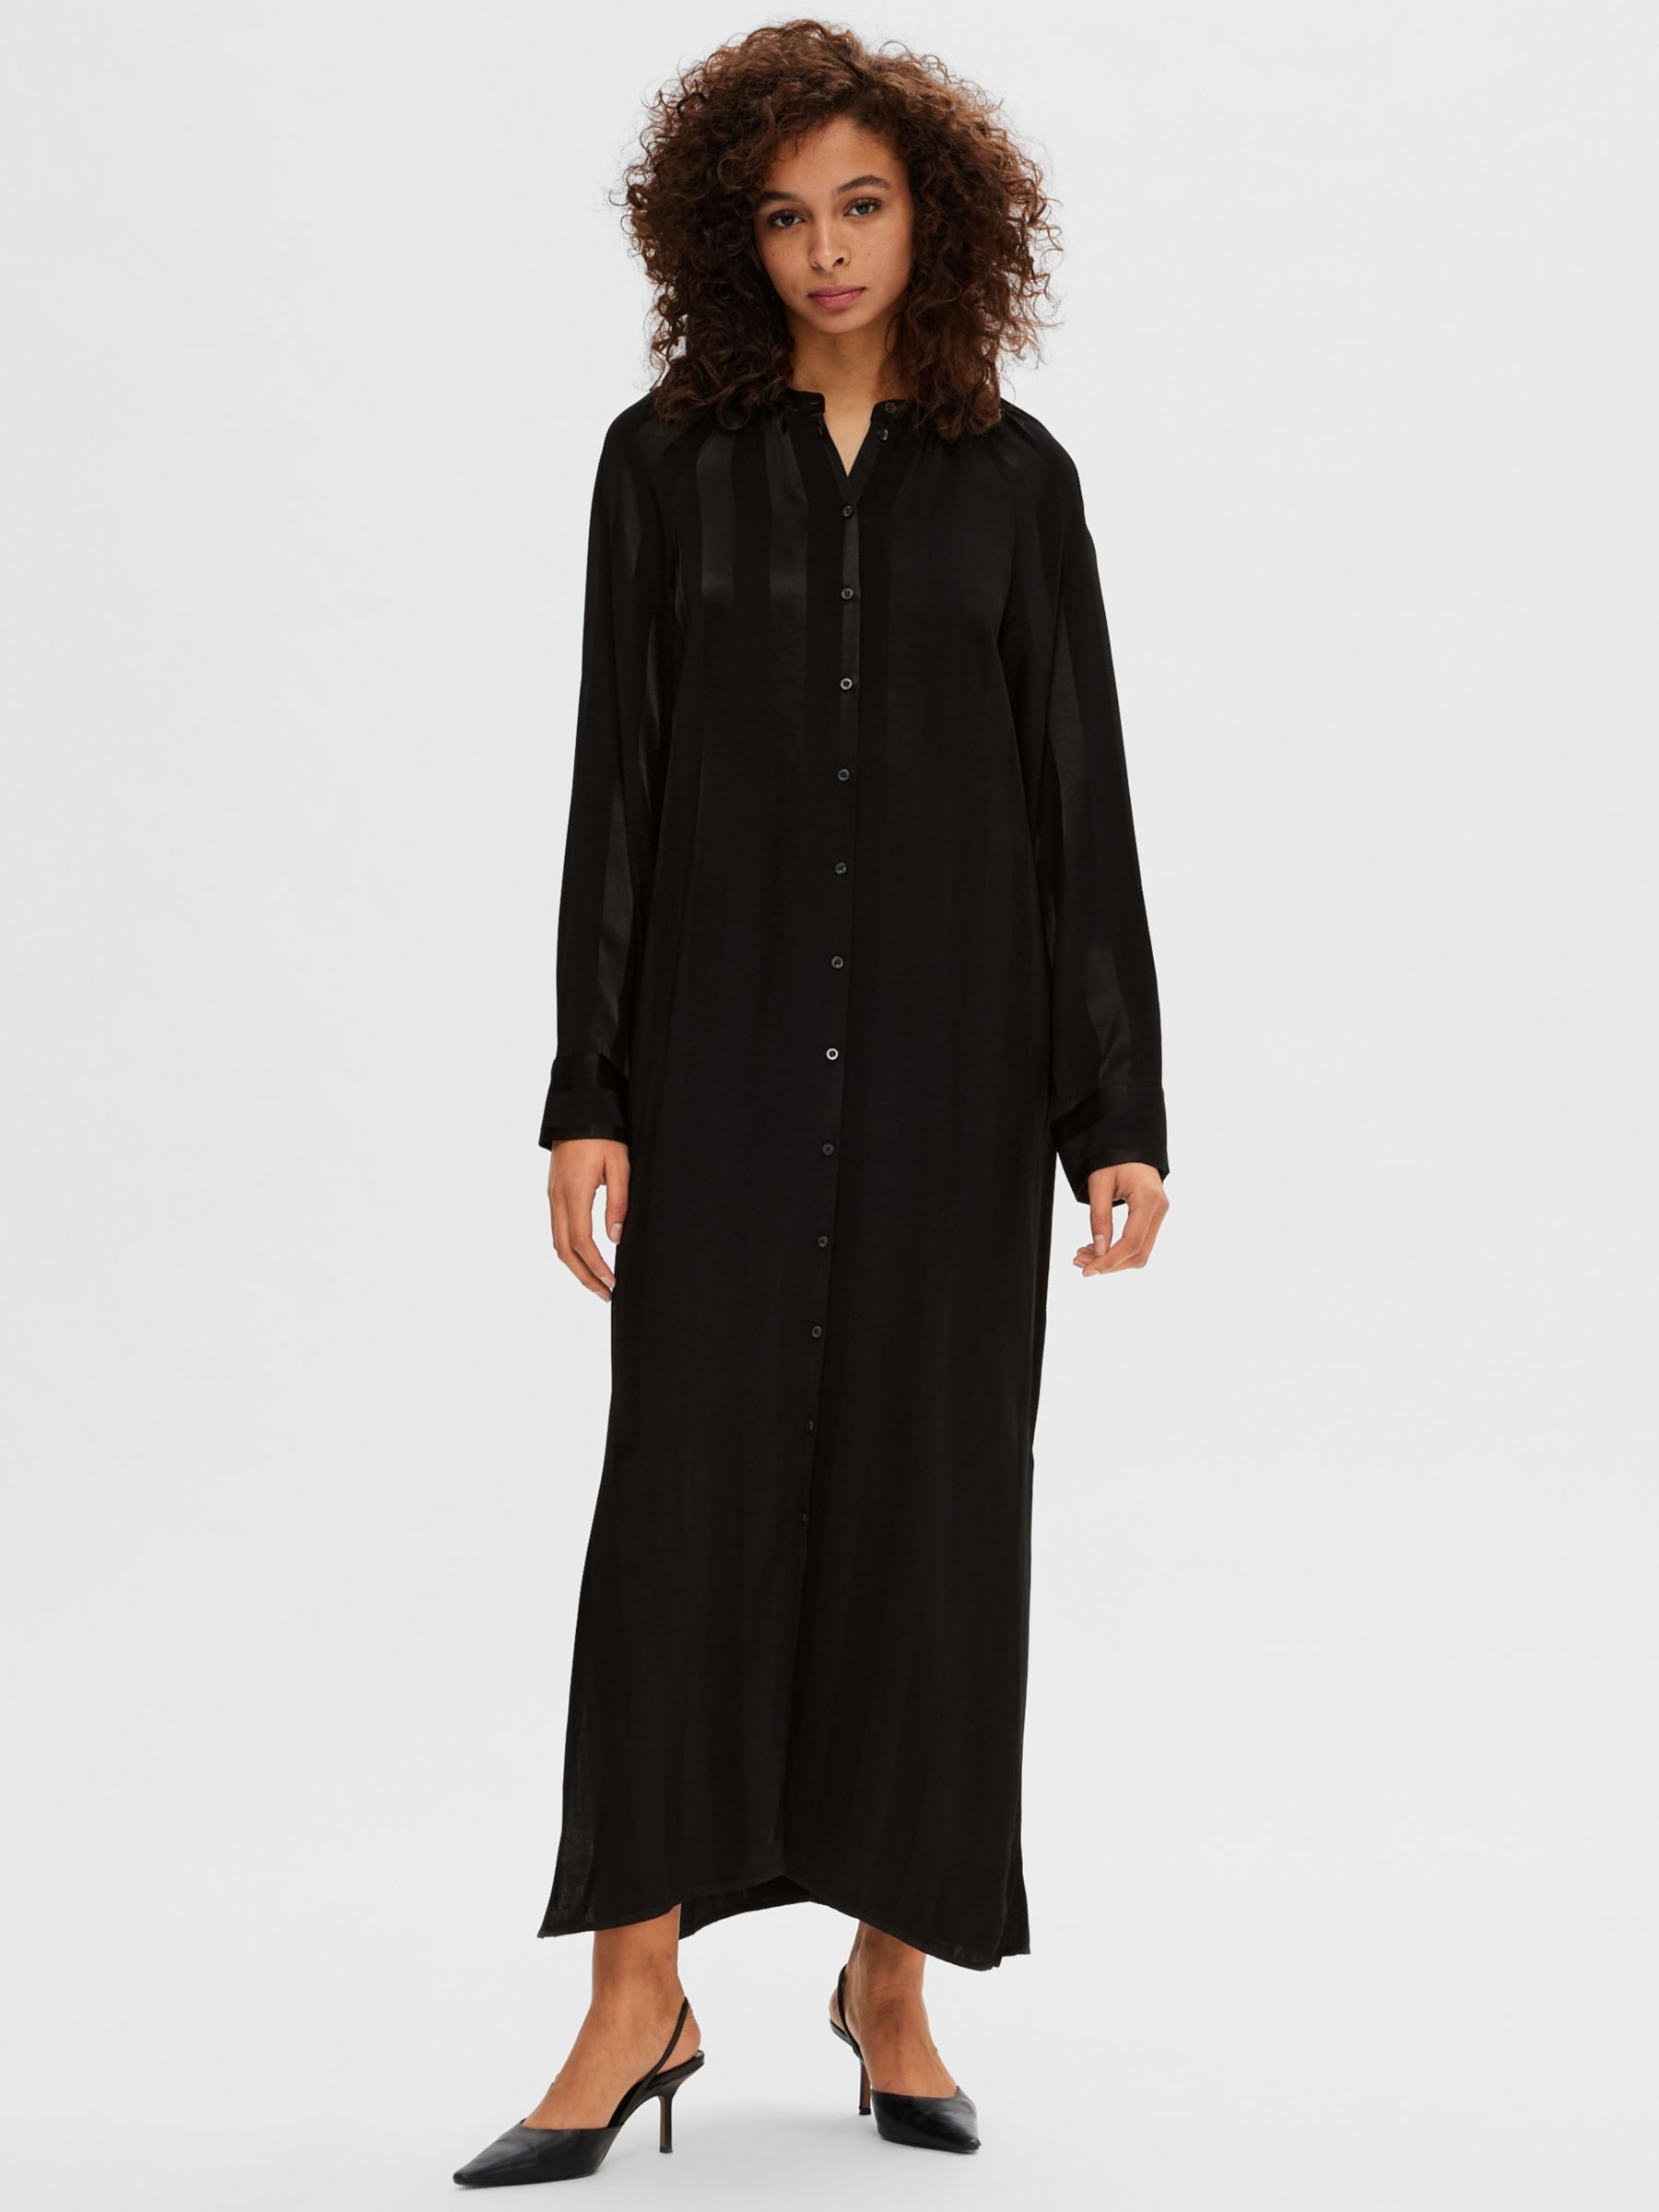 SELECTED FEMME Christel Maxi Shirt Dress, Black, 38